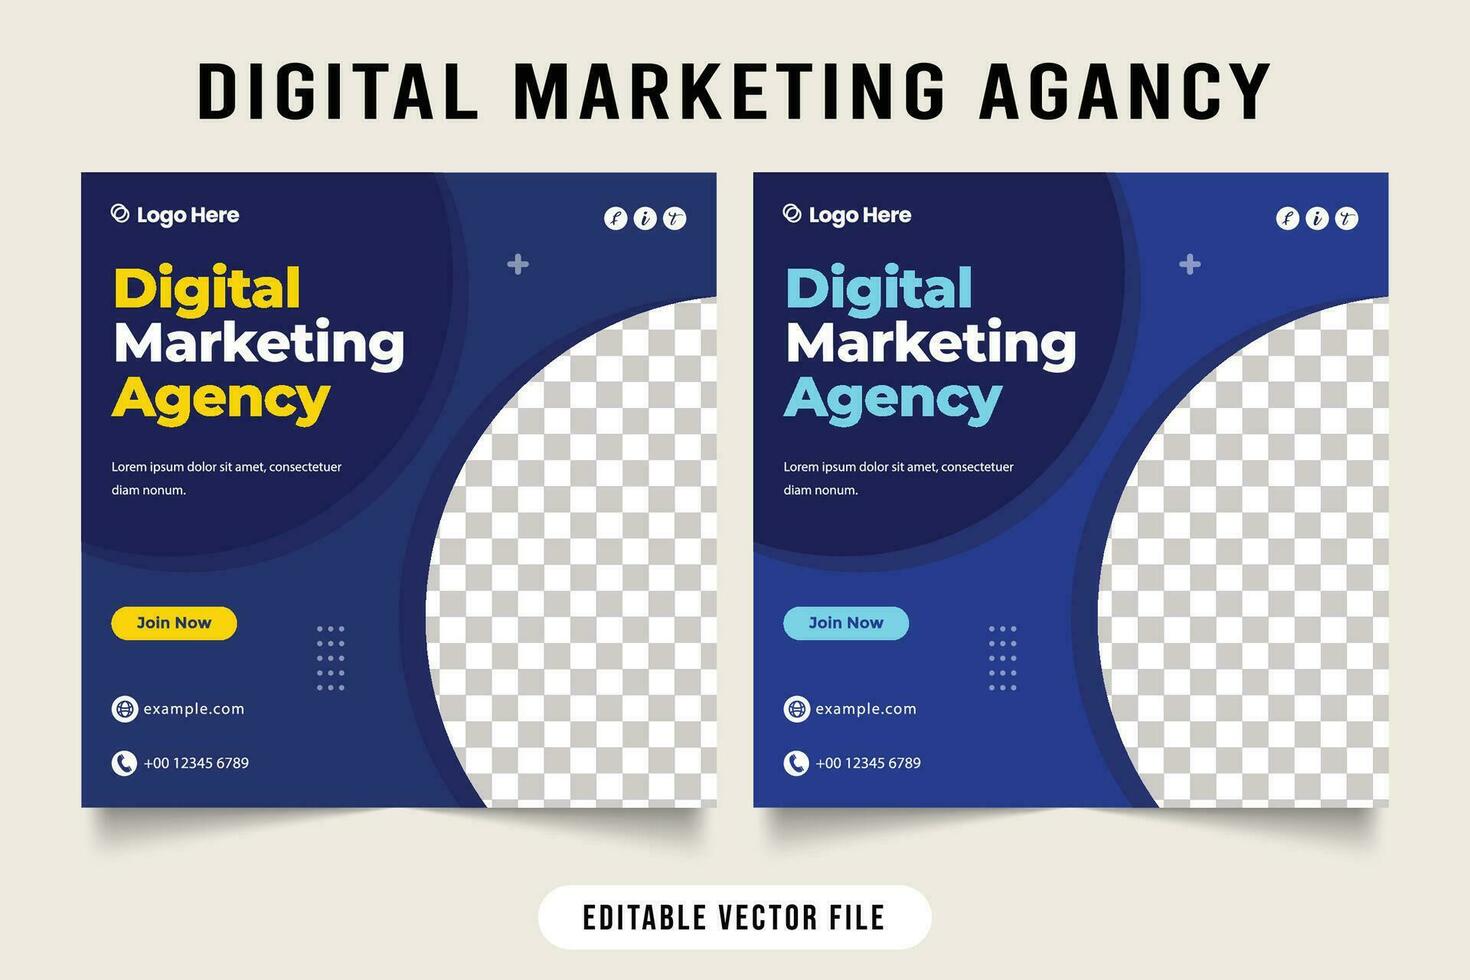 Digital marketing agency social media post template. Marketing Company web banner vector. Corporate social media post template. Online advertising poster layout design. vector